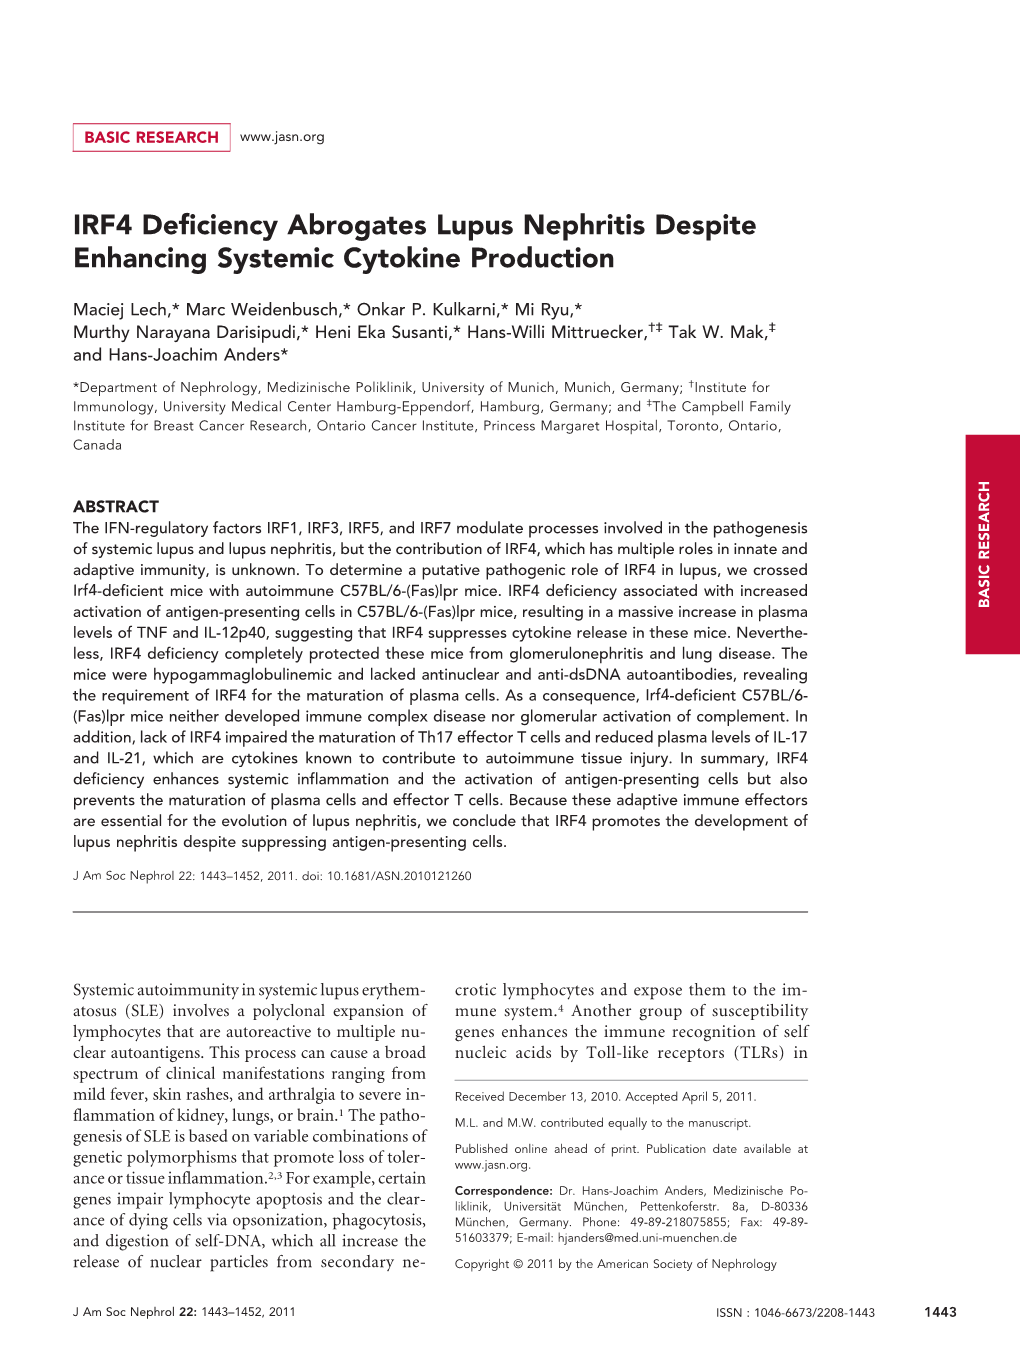 IRF4 Deficiency Abrogates Lupus Nephritis Despite Enhancing Systemic Cytokine Production